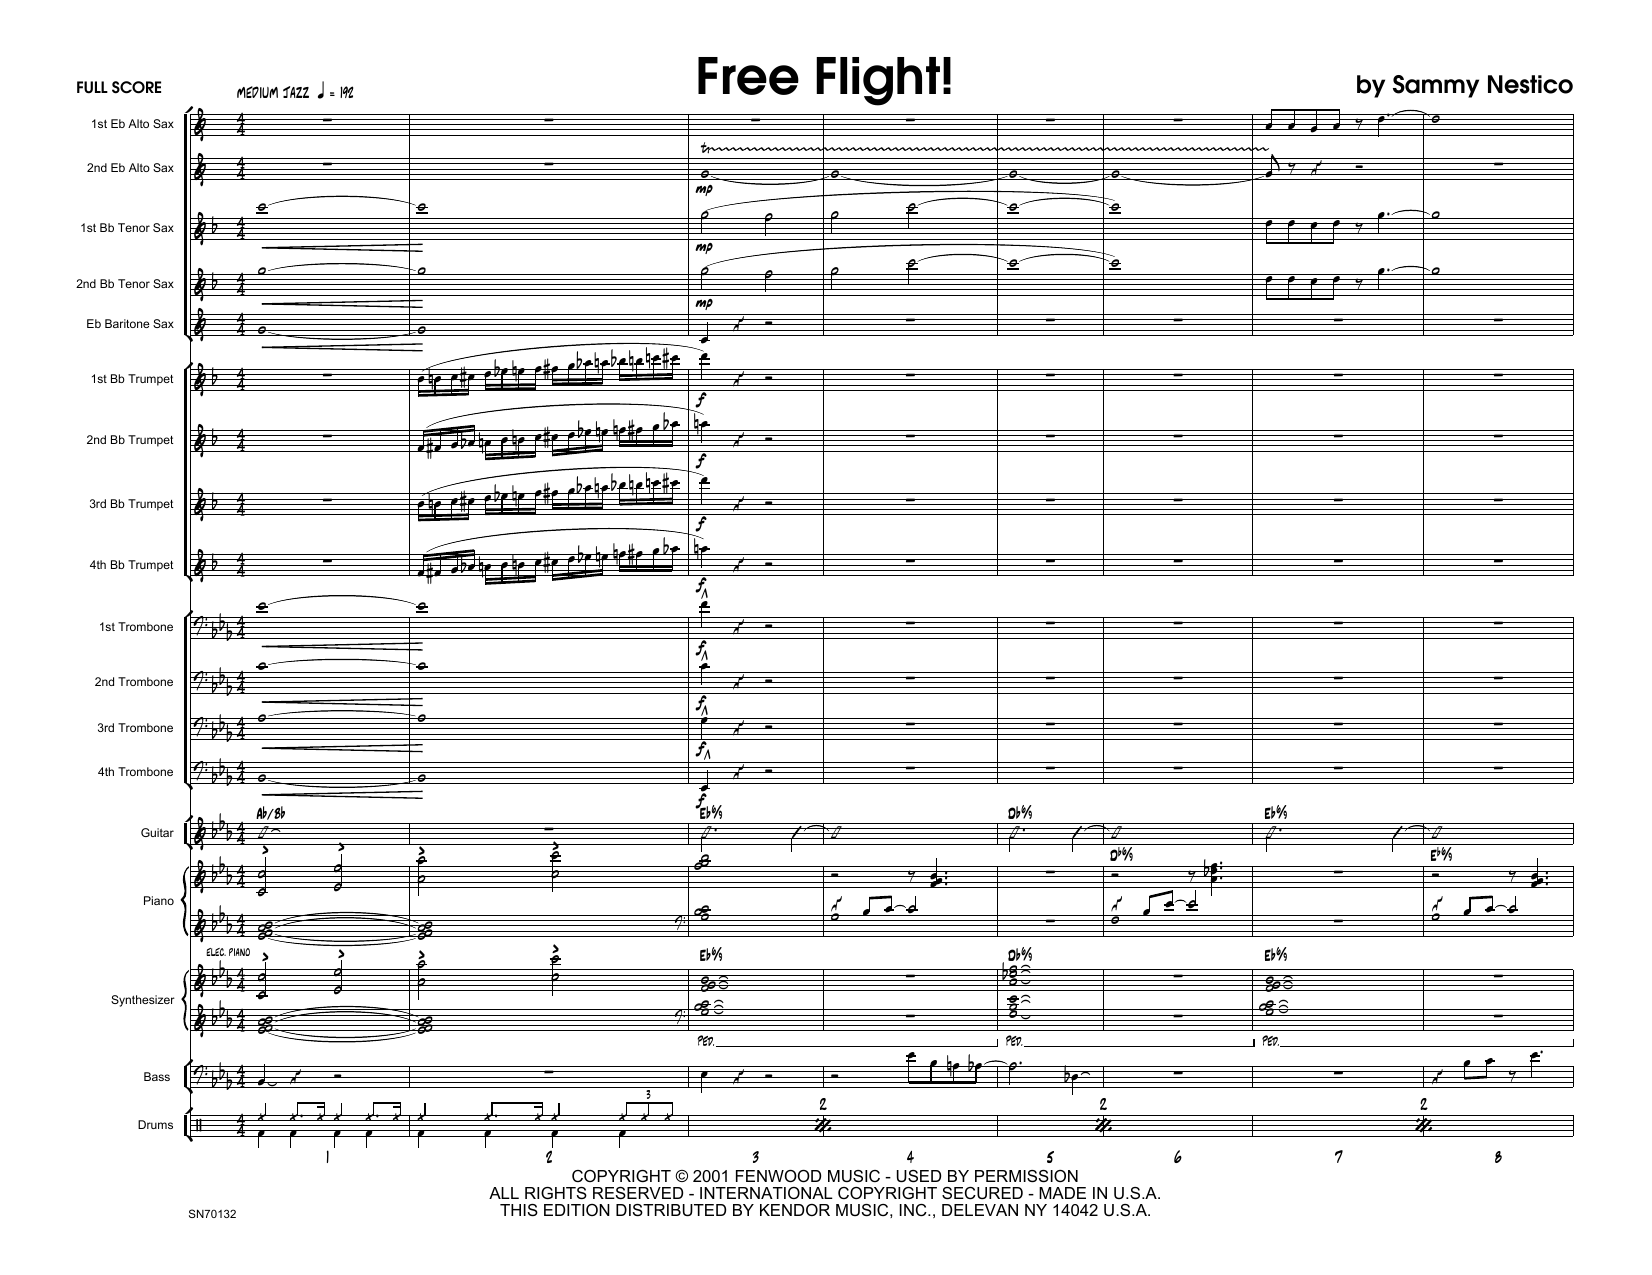 Download Sammy Nestico Free Flight! - Full Score Sheet Music